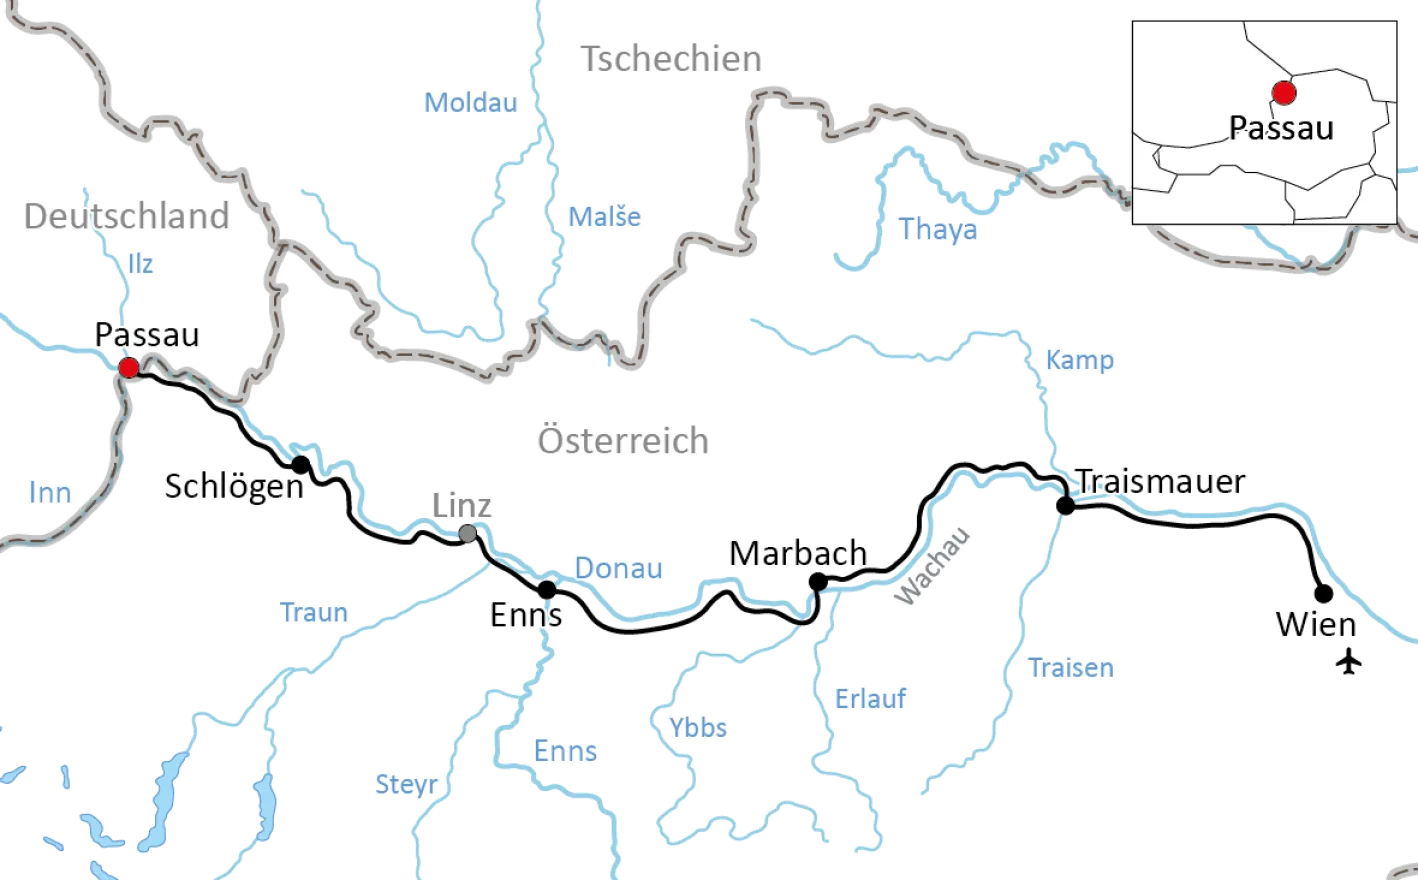 Bike tour from Passau to Vienna